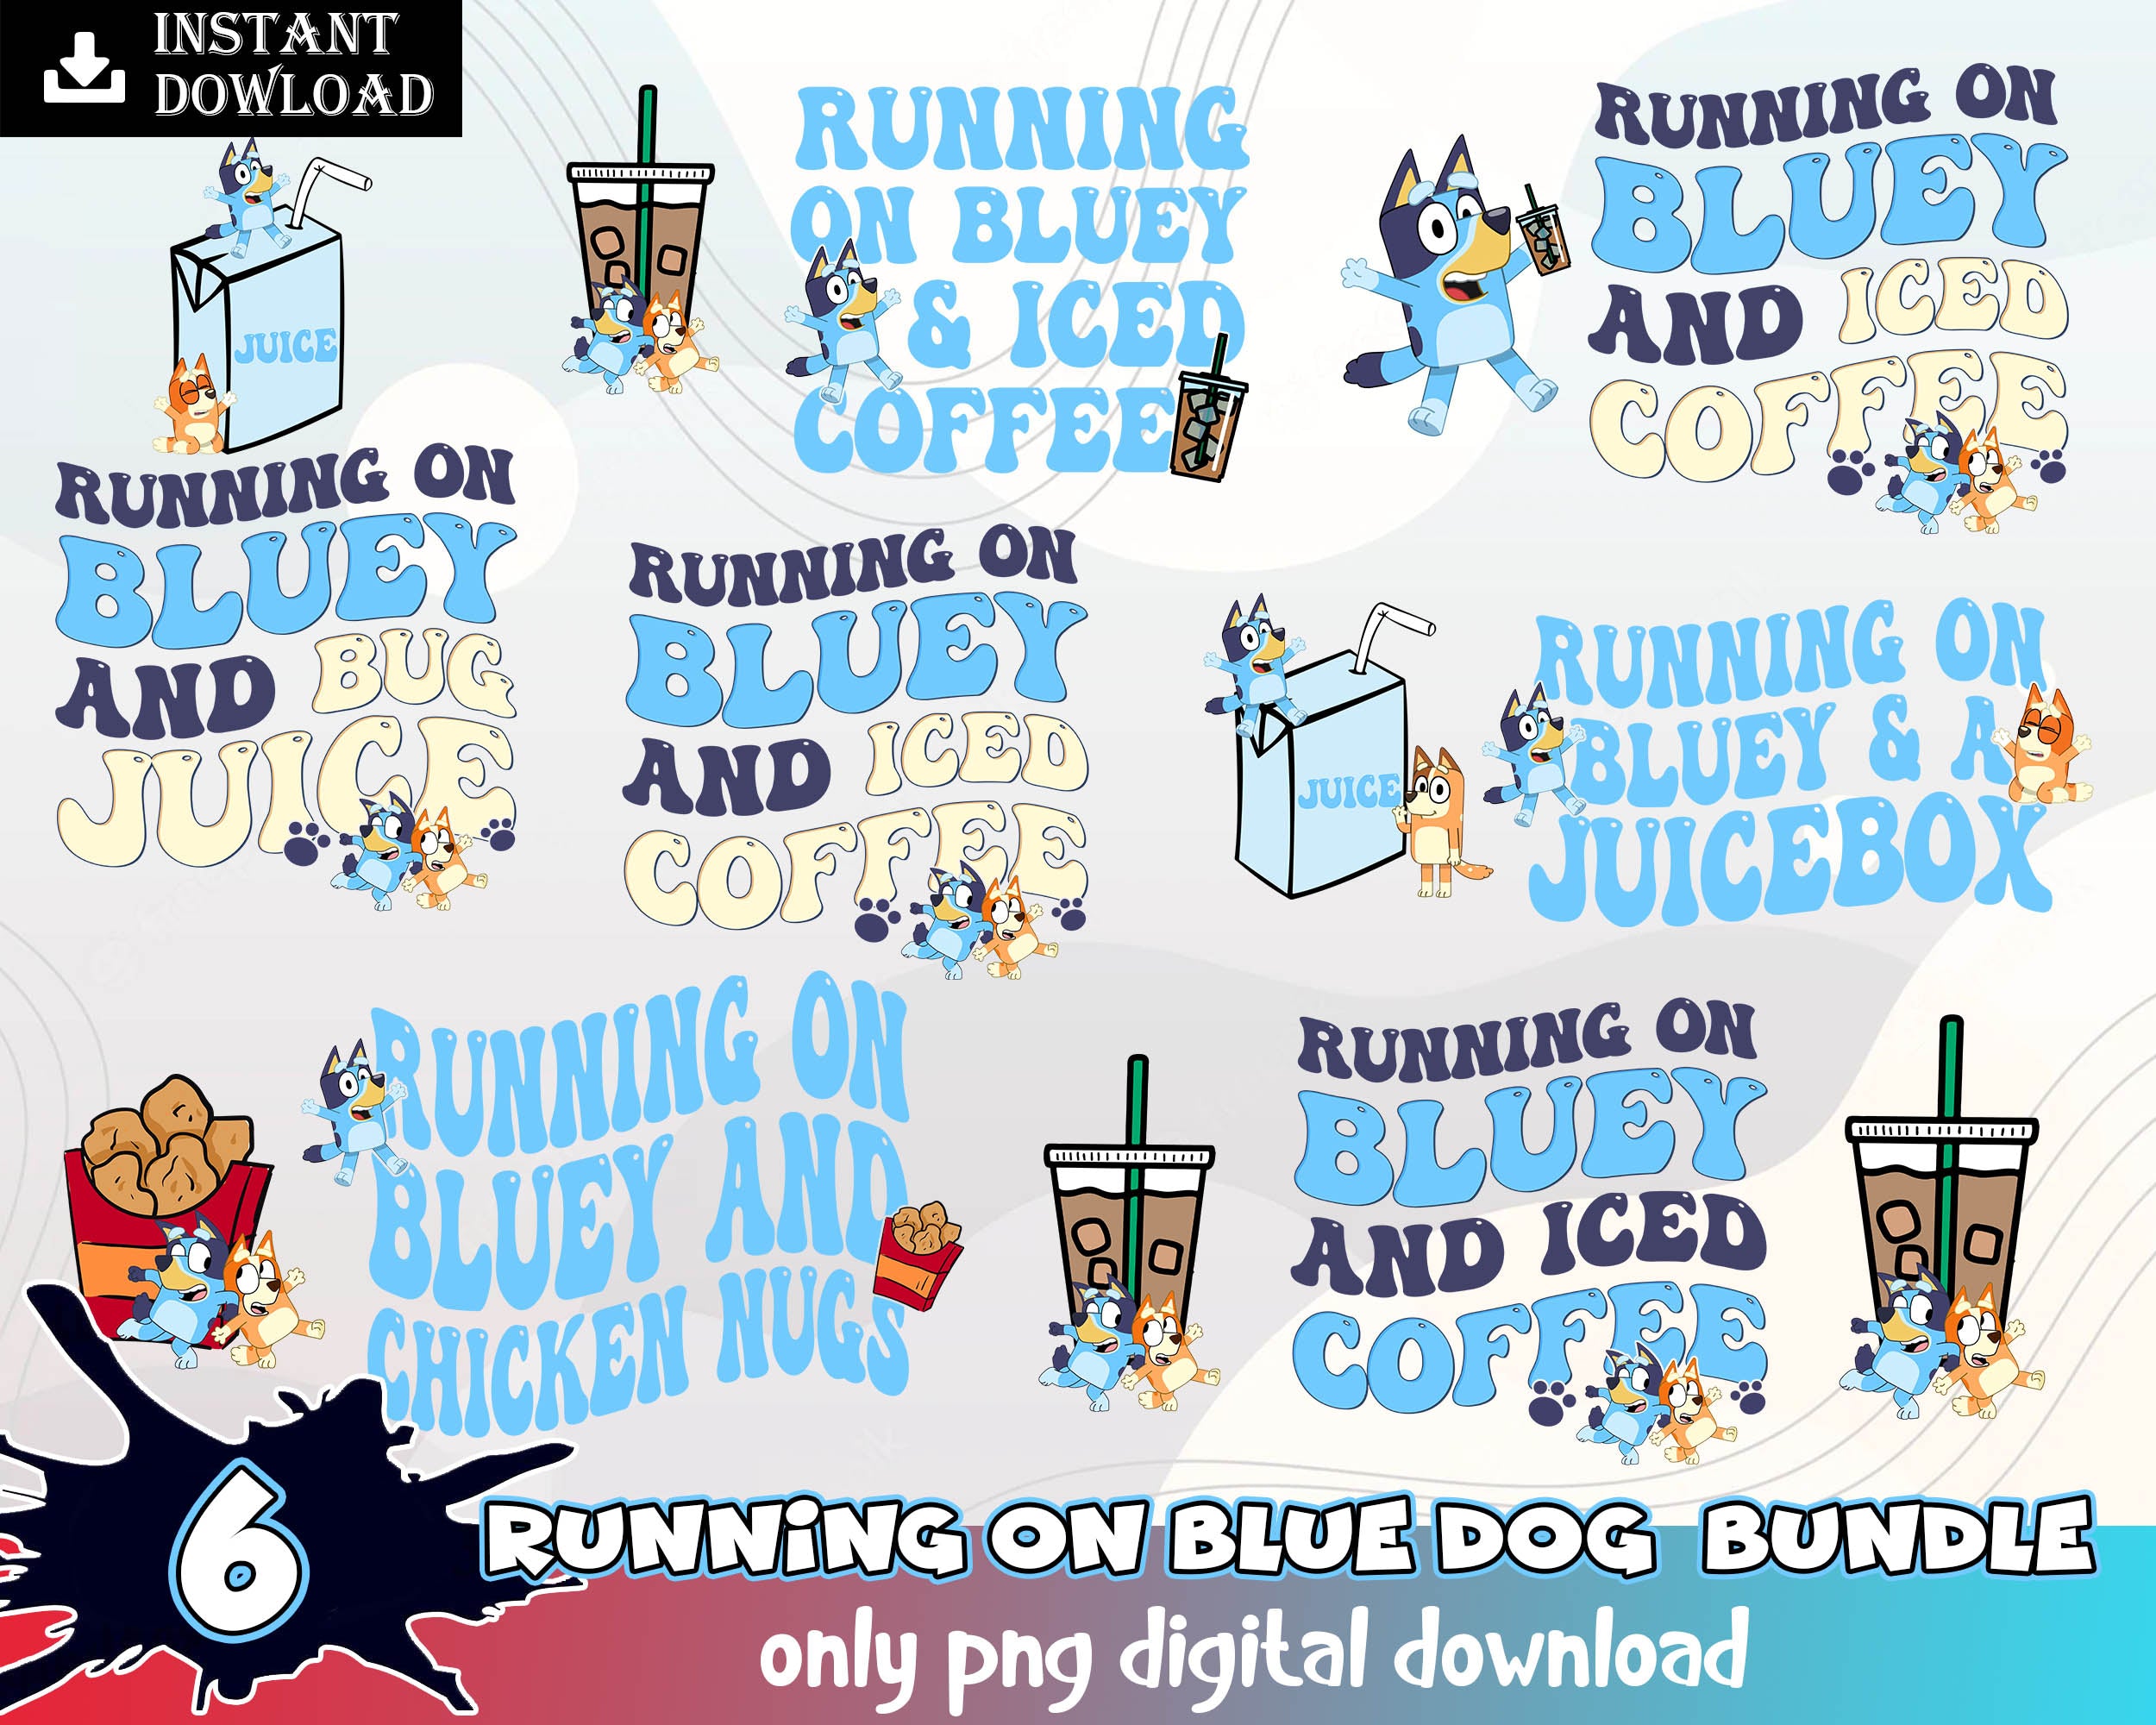 Trendy 6 Running on Blue y & Iced Coffee Juicebox Chicken Nugs Png Bundle, Blue Dog Design Bundle, Instant Download